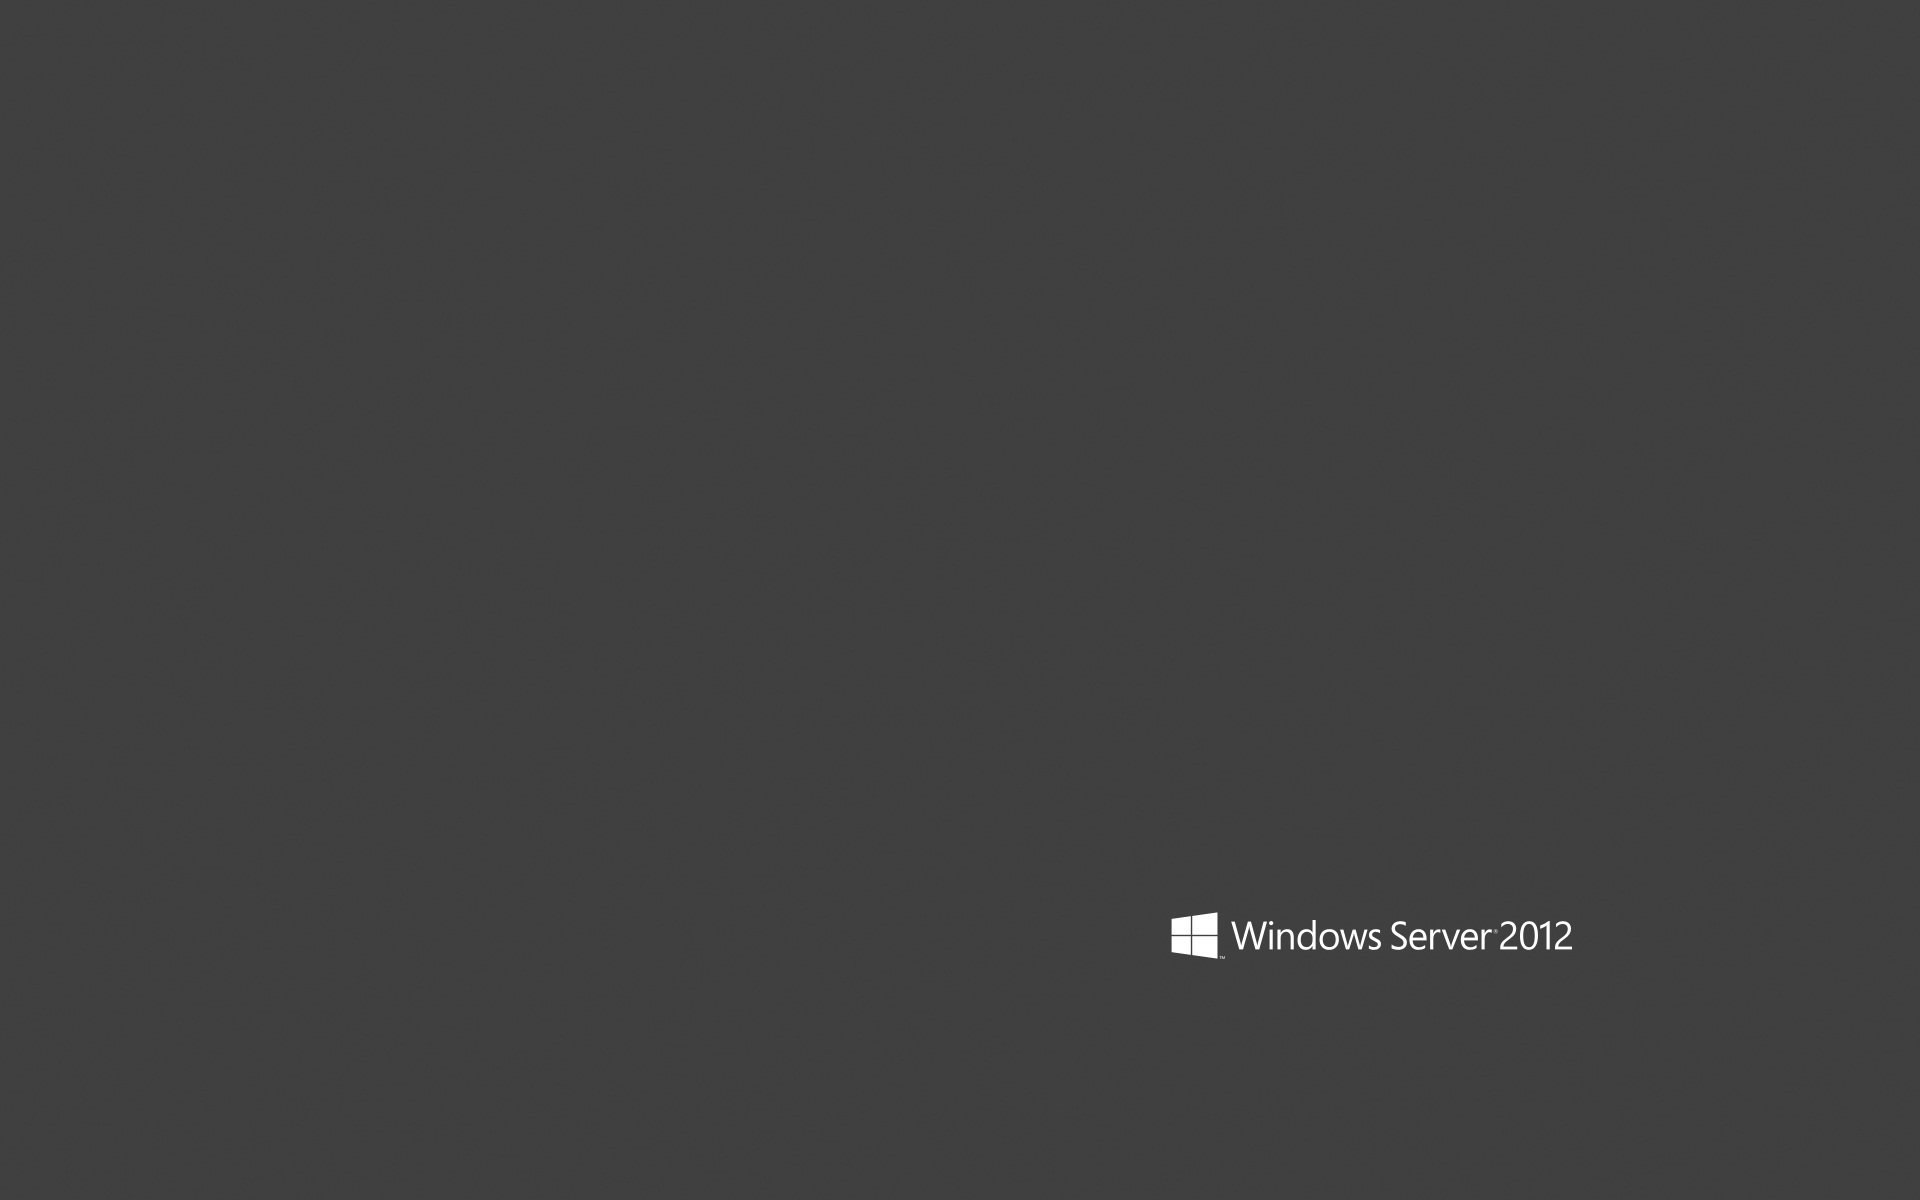 Windows Server 2012 Default Wallpaper by alexstrand7 on DeviantArt